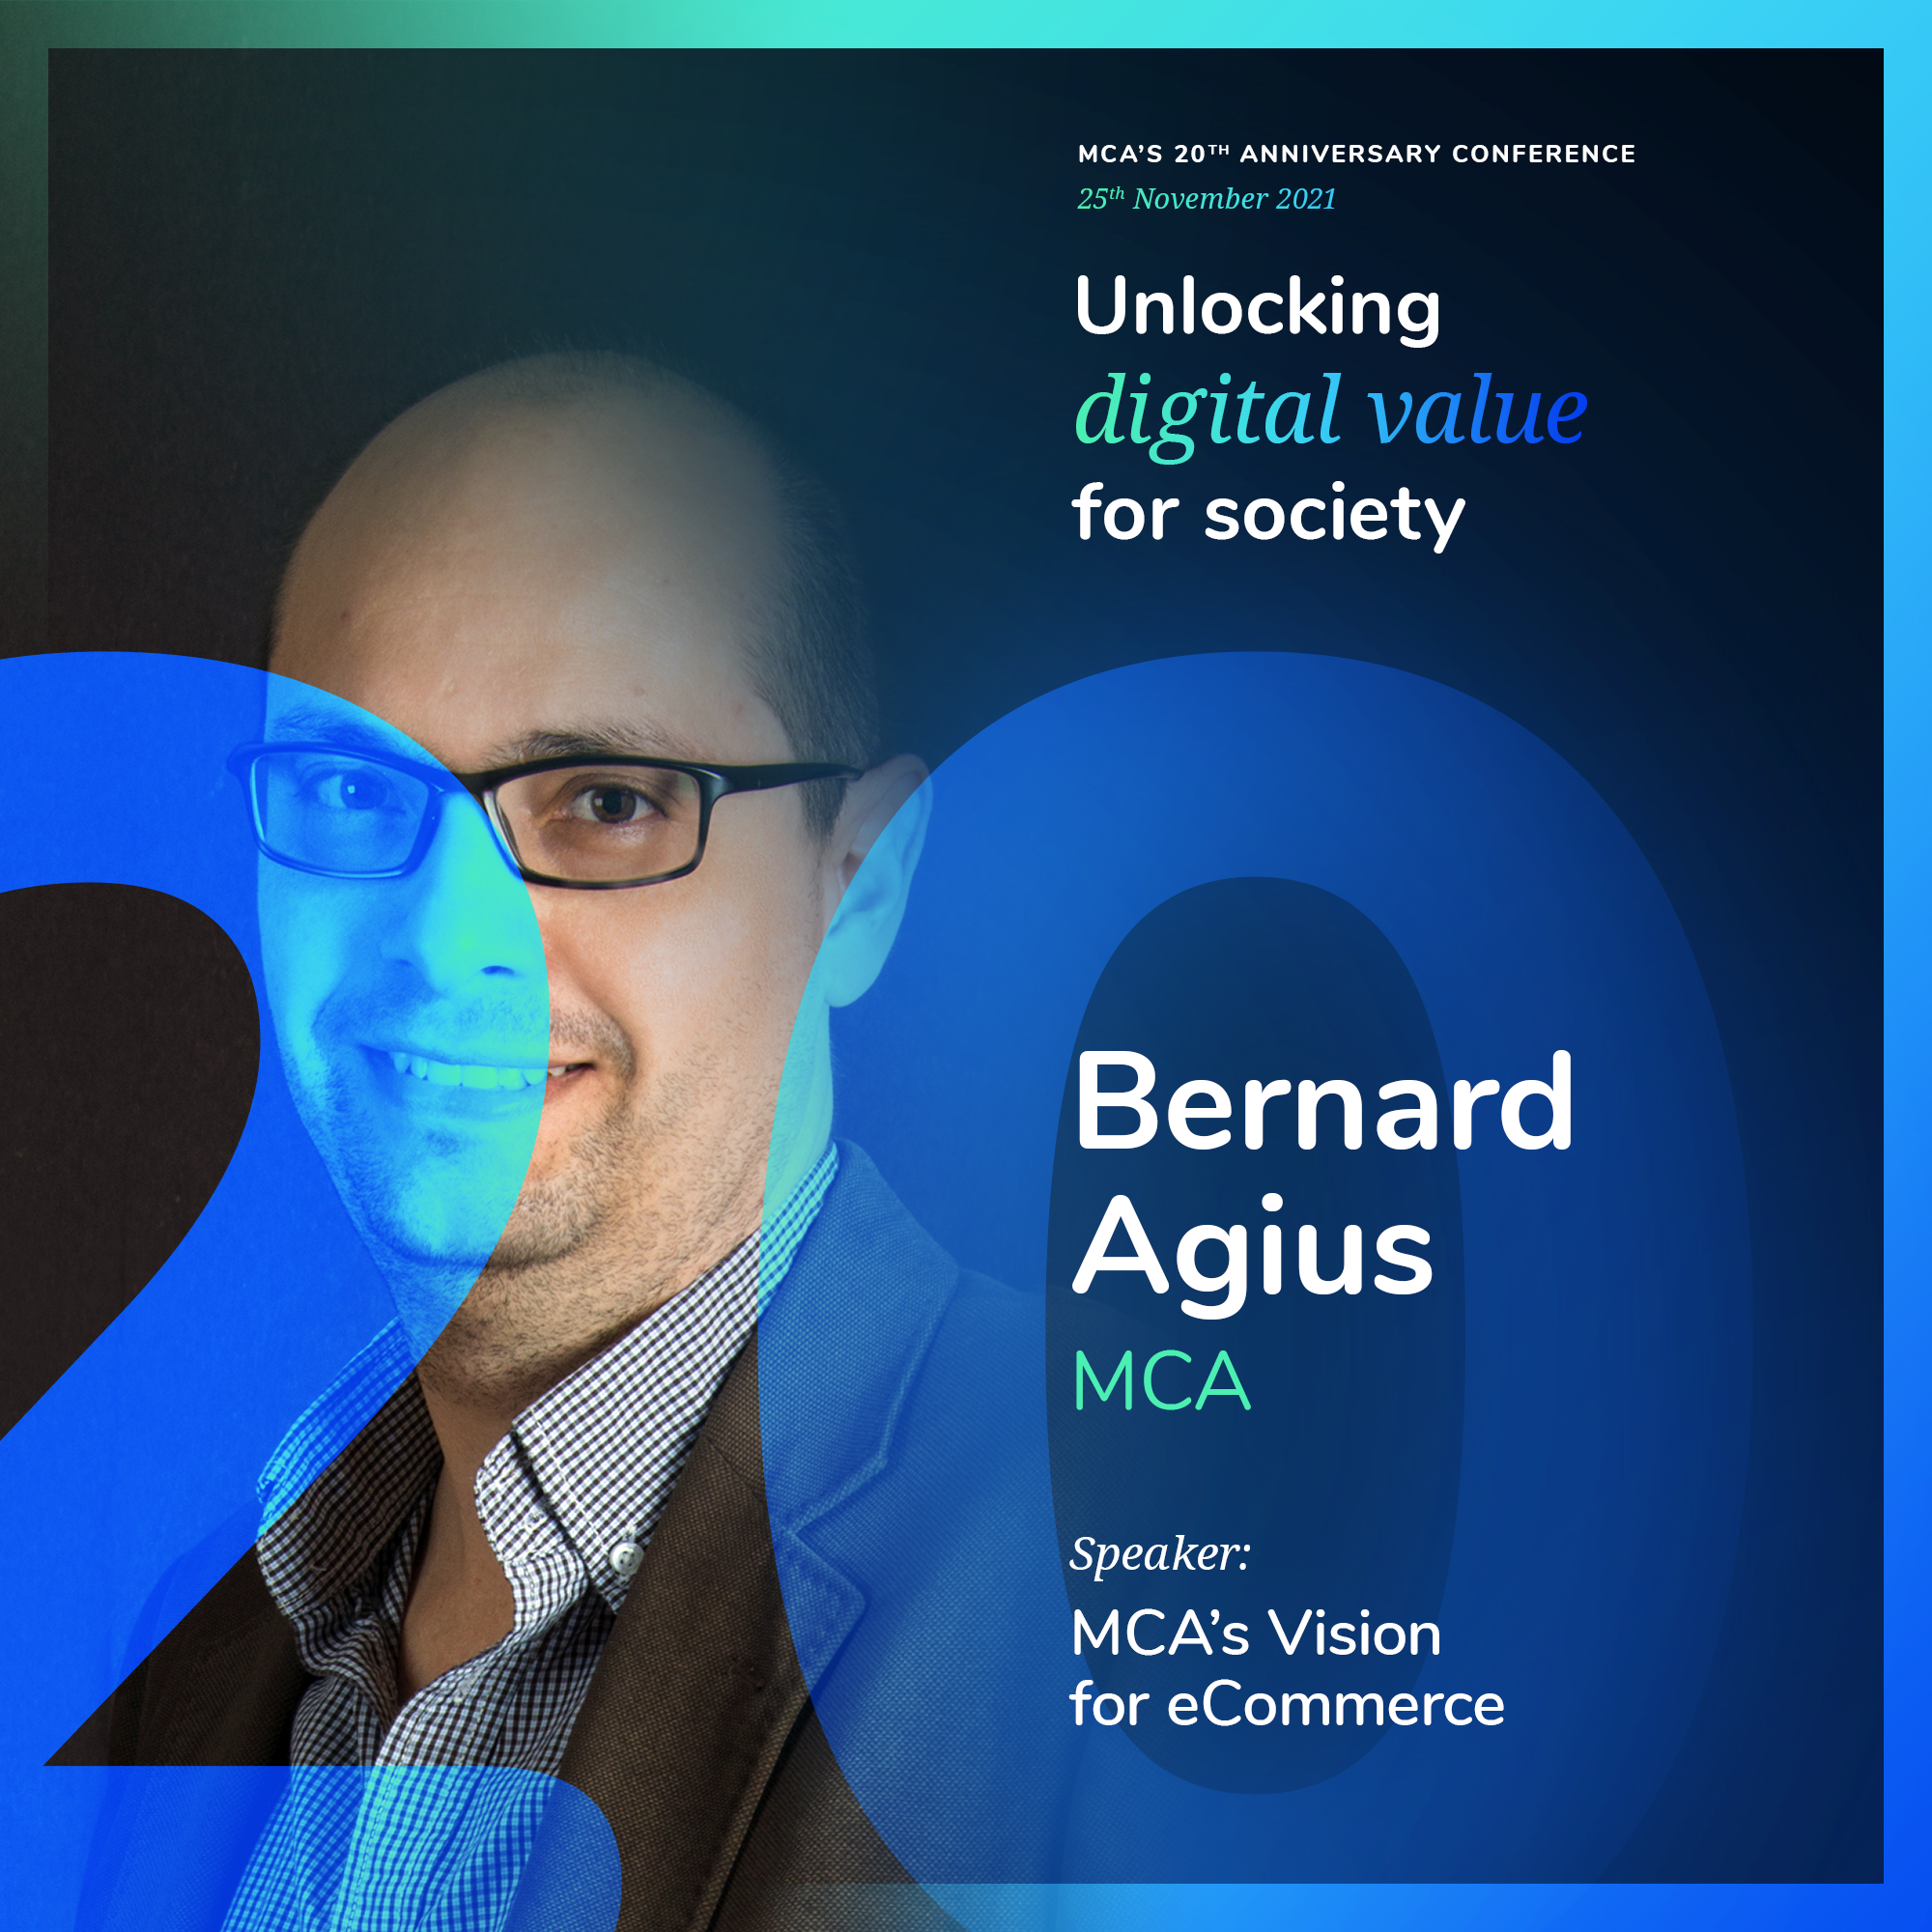 Bernard Agius speaker profile